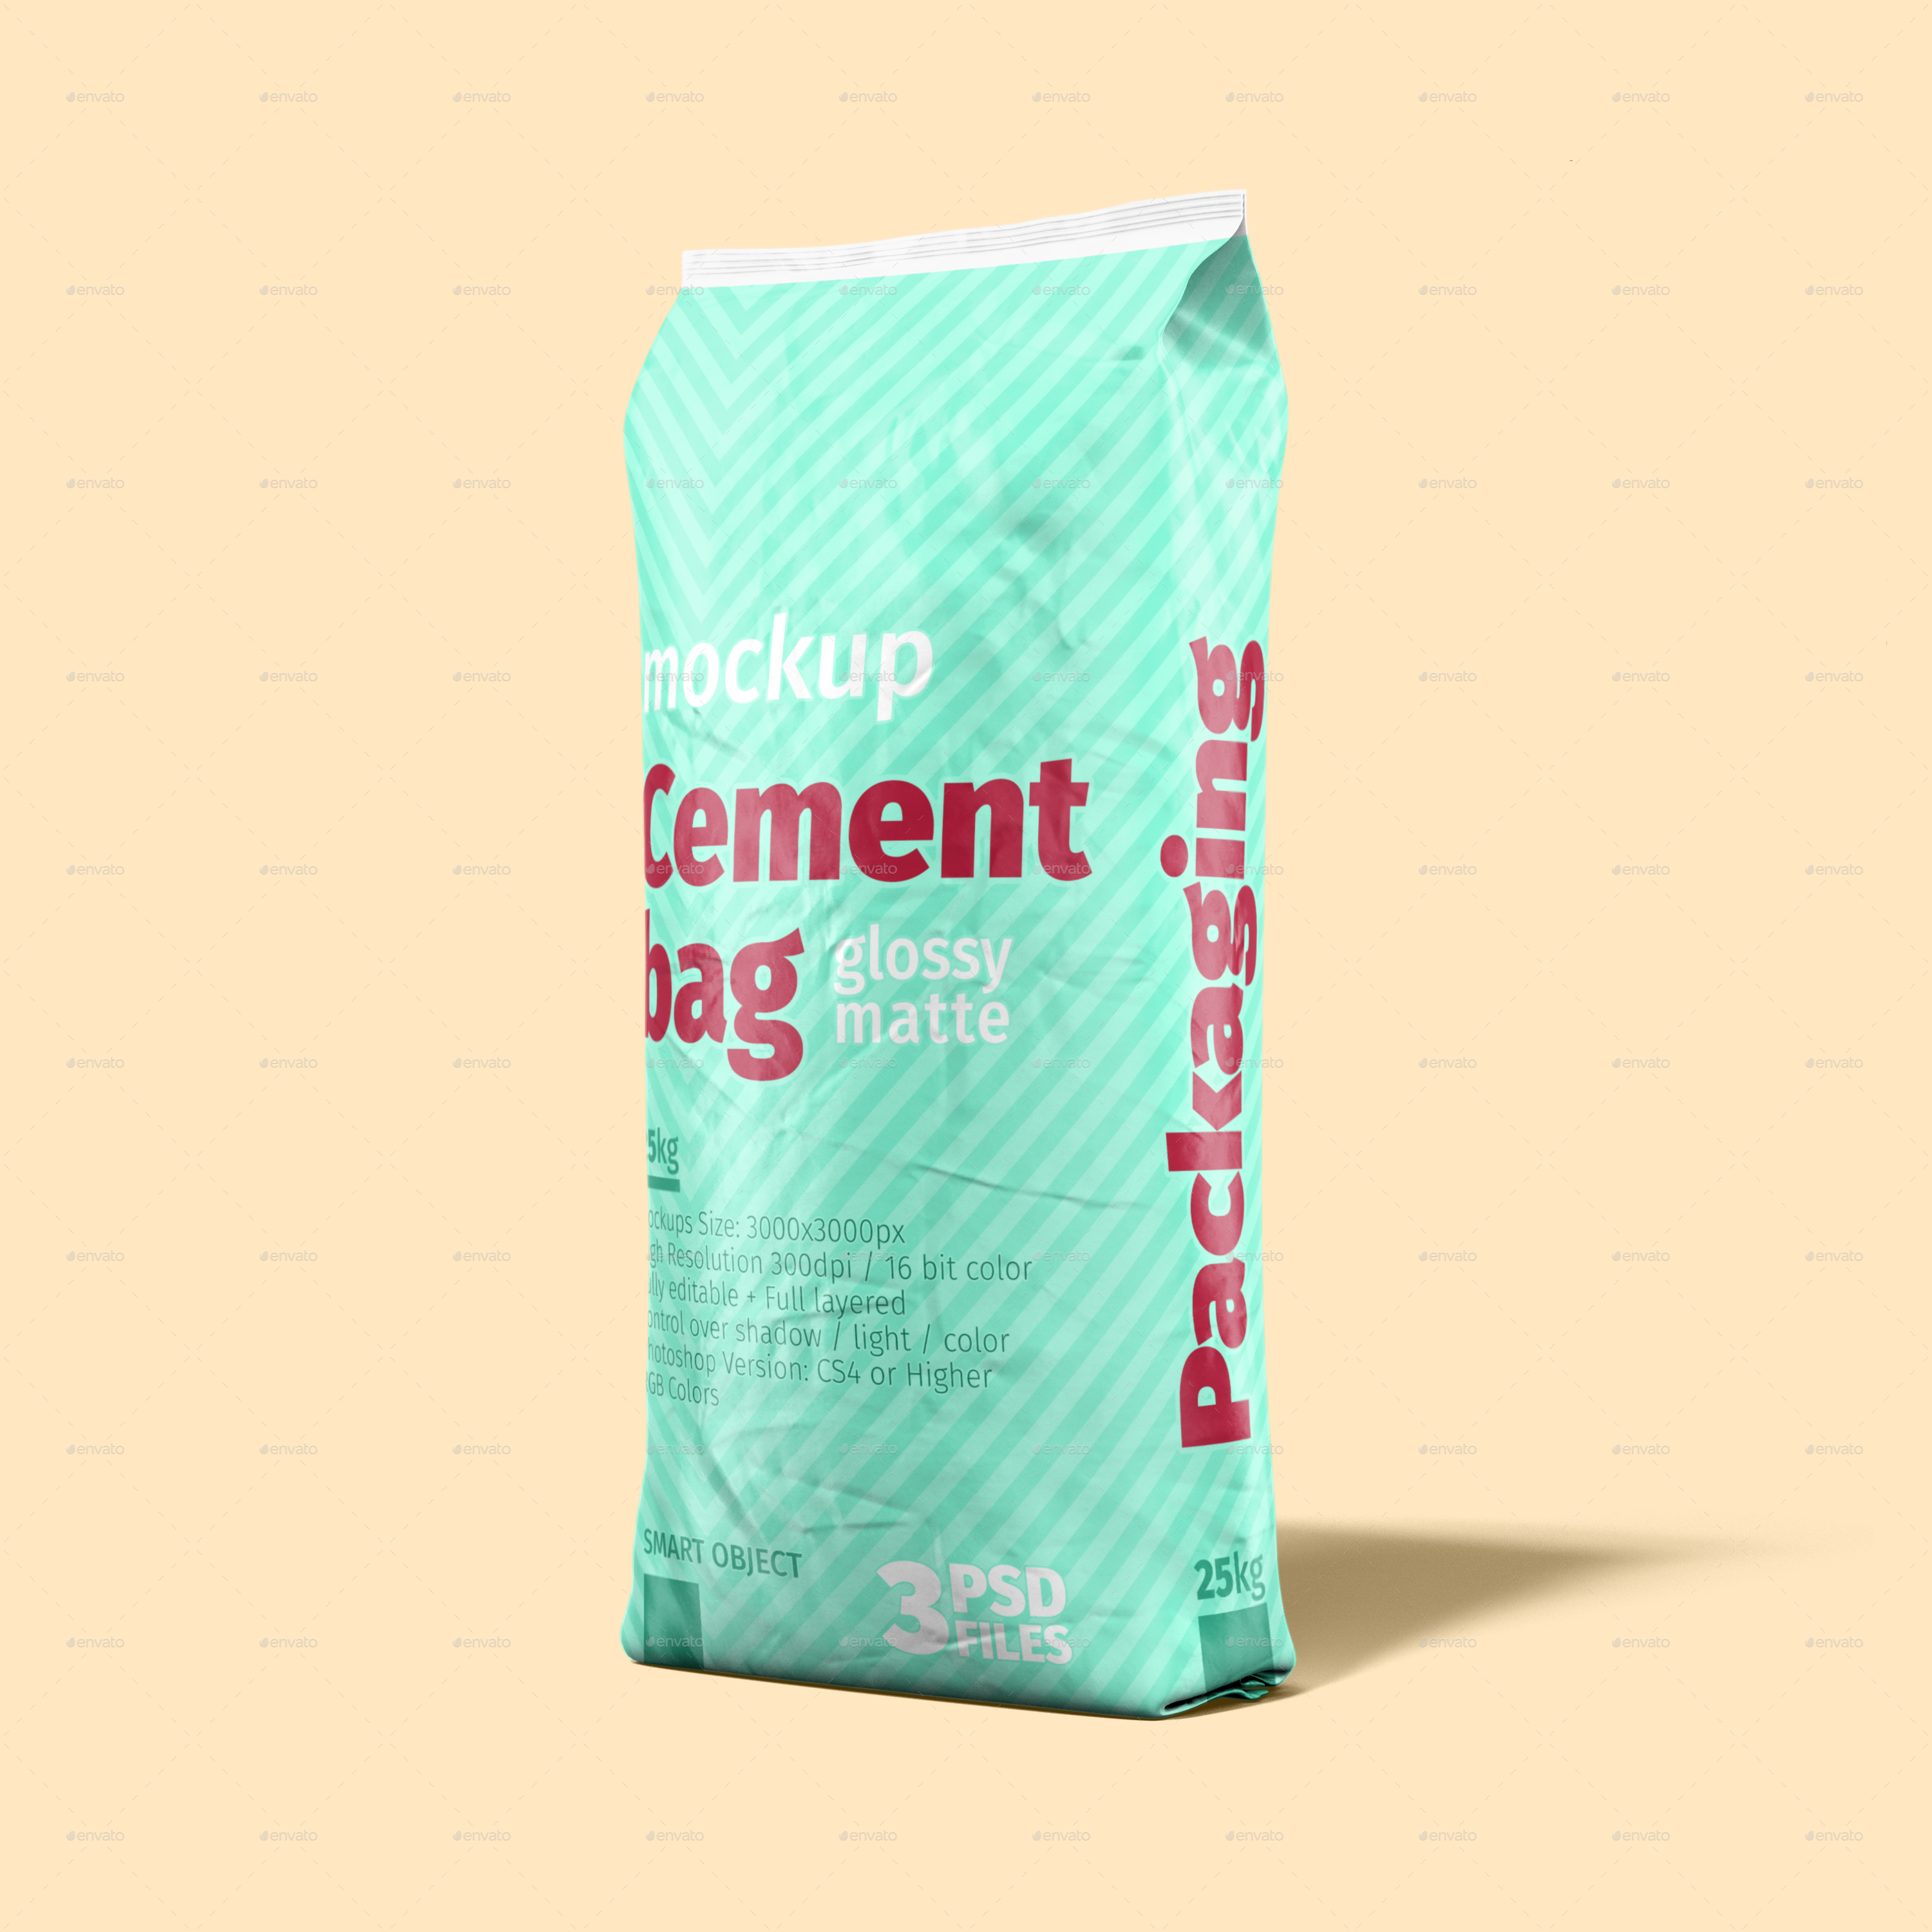 Download Cement Bag Mock-Up by Radetzki | GraphicRiver